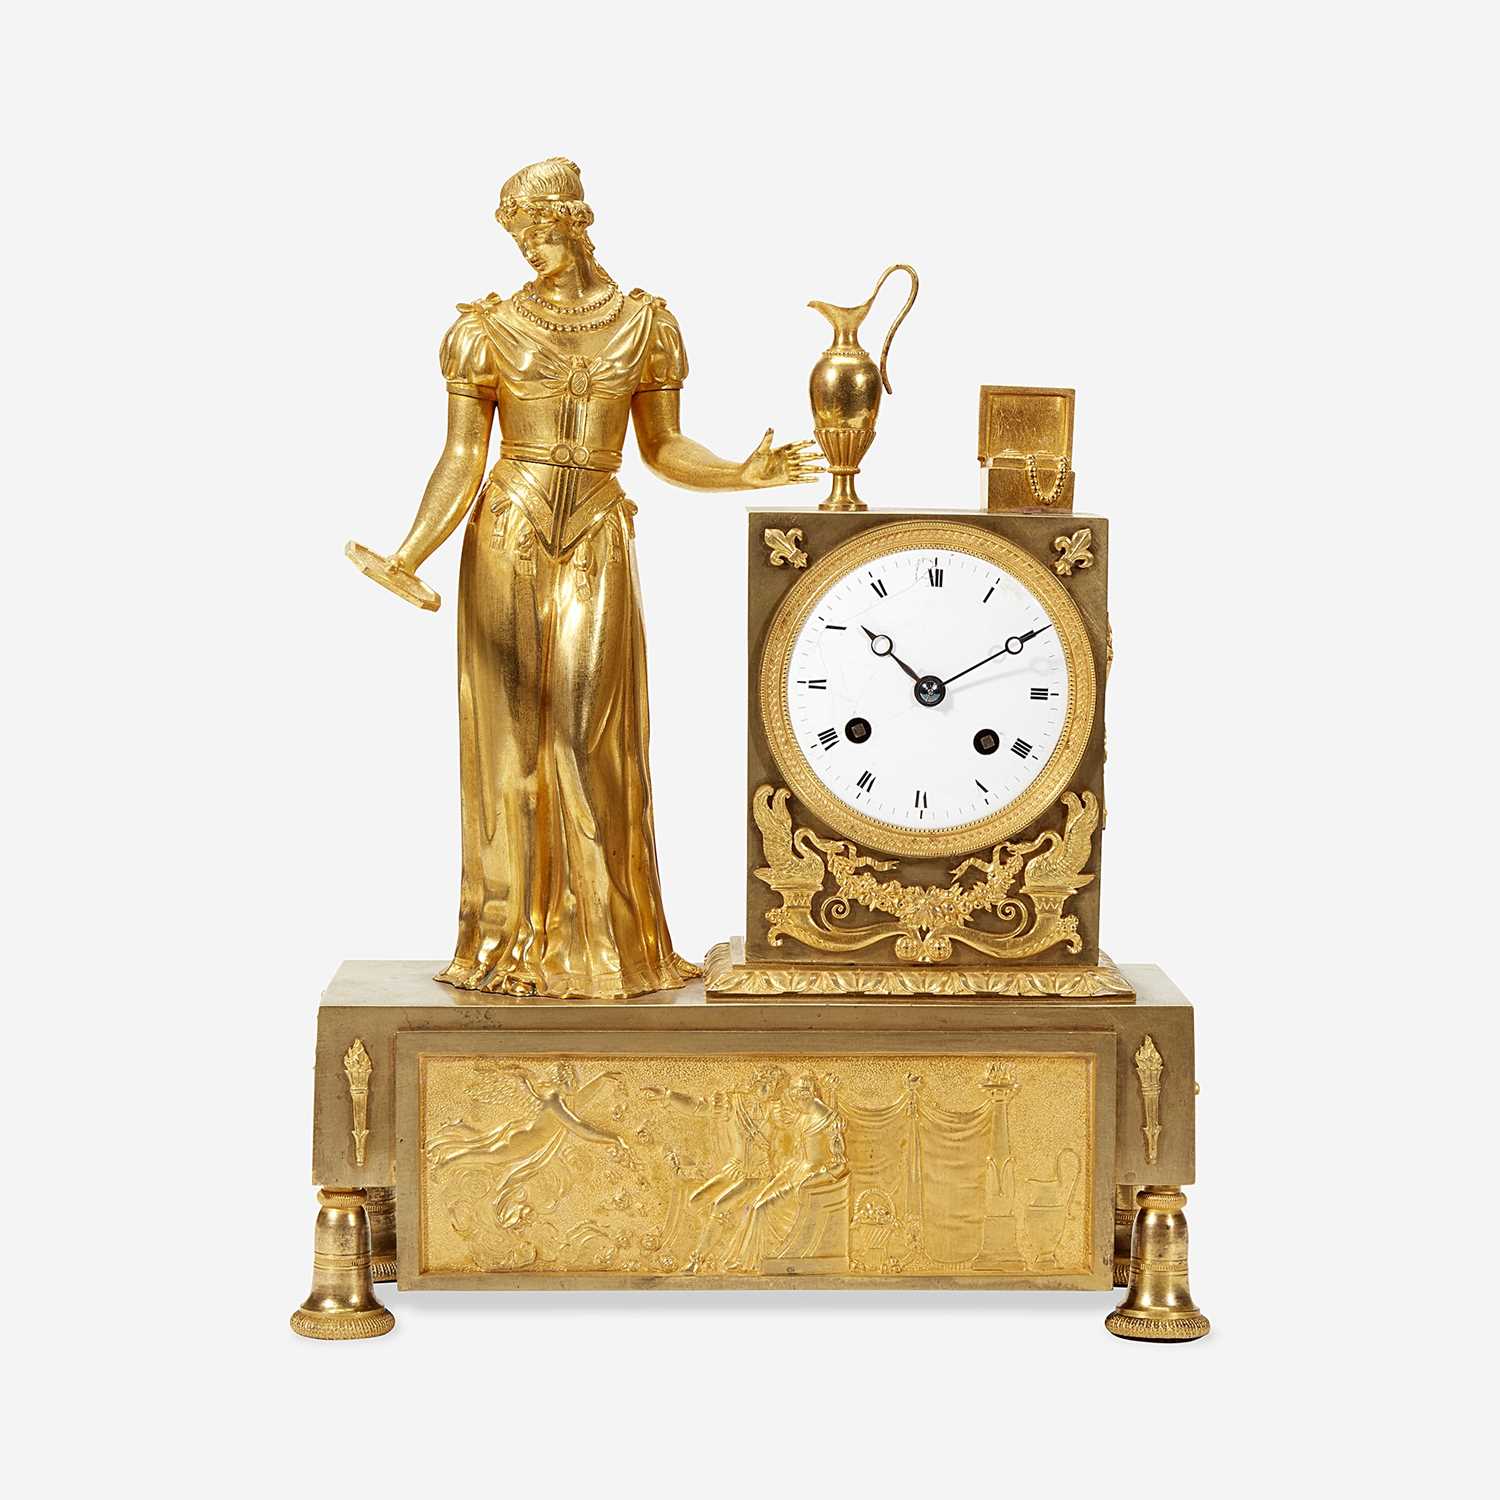 Lot 43 - A French Gilt Bronze Mantel Clock